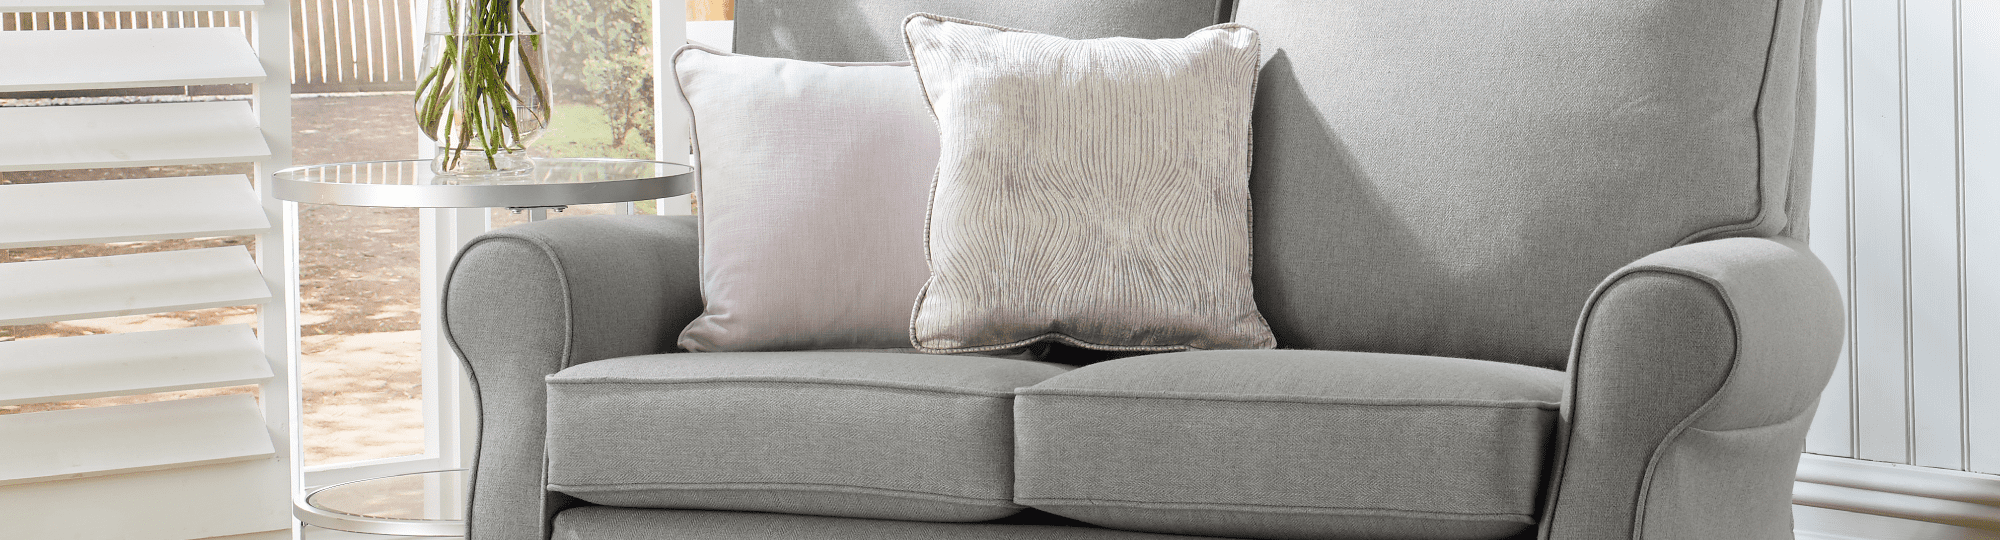 Modern Summer Fabrics For Your Multiyork Sofa Covers | Cover My Furniture Regarding Multiyork Sofa Covers (View 4 of 15)